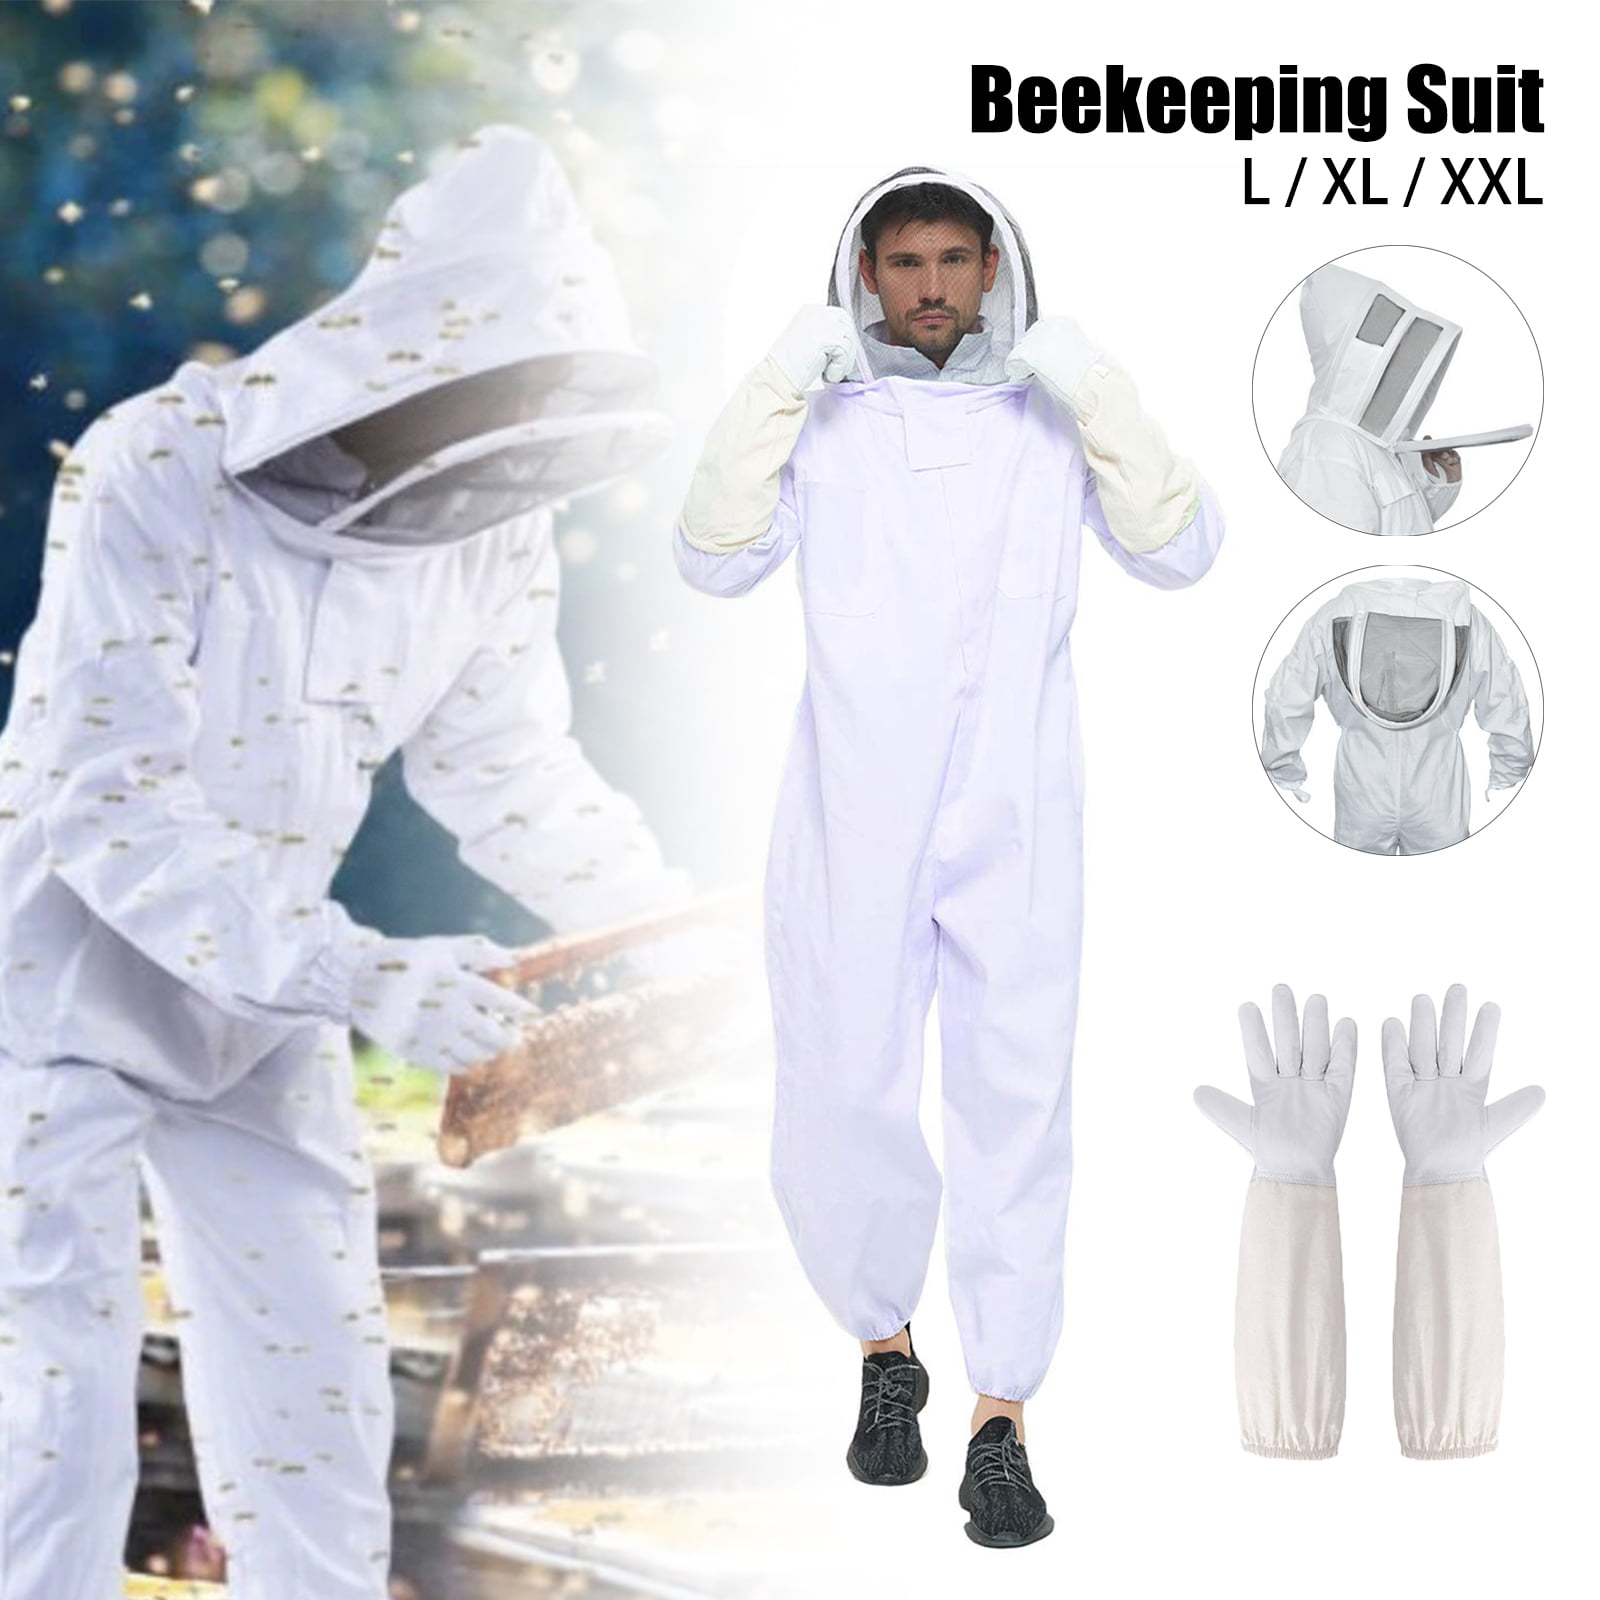   Protective PPE Free size reusable hazmat suit with hood  